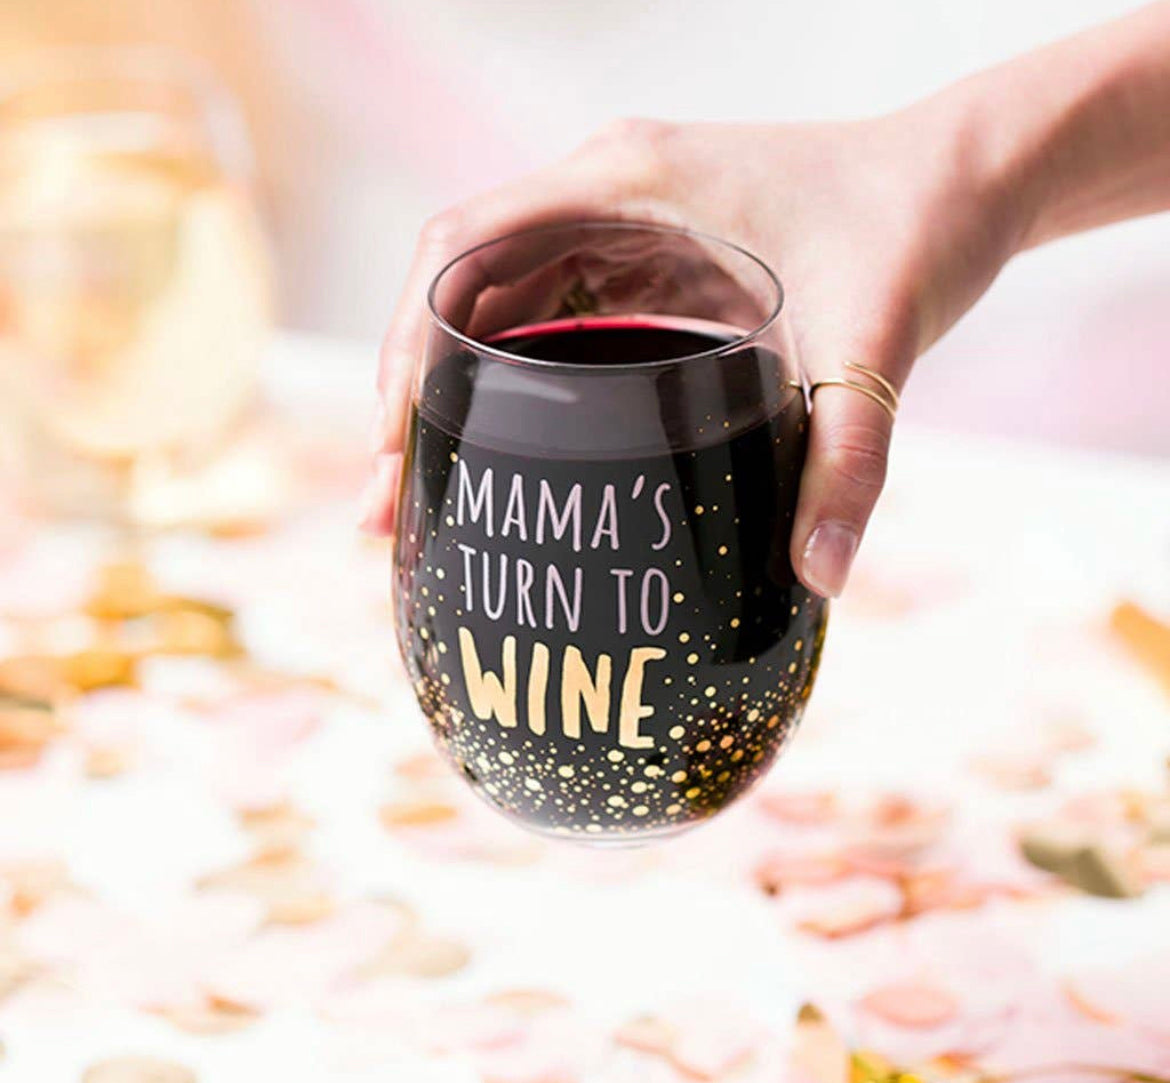 Mama’s turn to wine